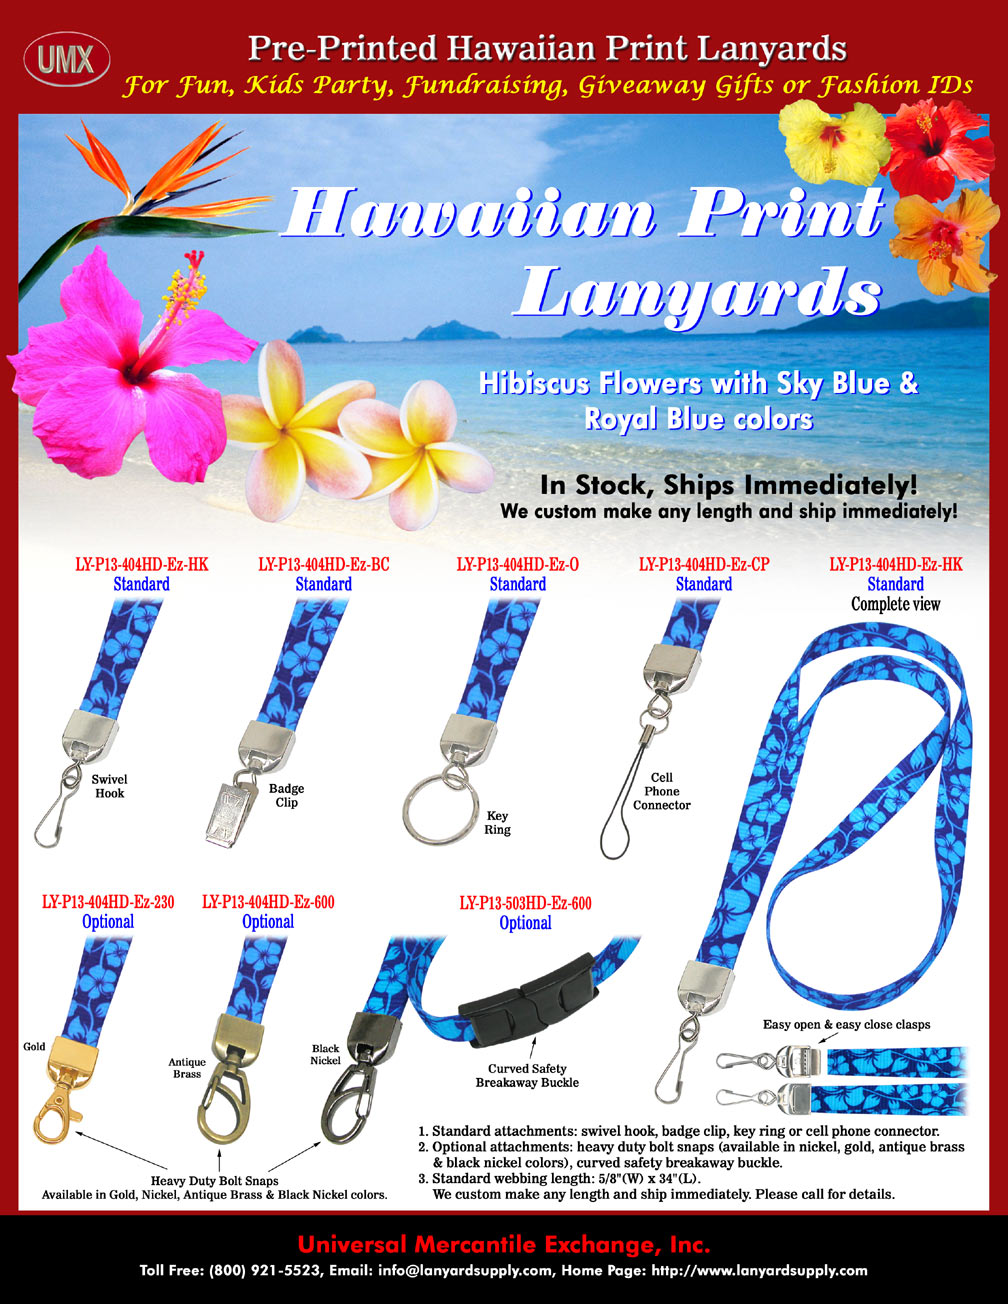 Hawaiian Lanyards: Hawaiian Print Cell Phone Straps, Hawaiian Patterns Printed Lanyards - Great For Hawaiian Travel Company, Business, Agents, Kids Party, Fundraising, Promotional Giveaway or Gifts.